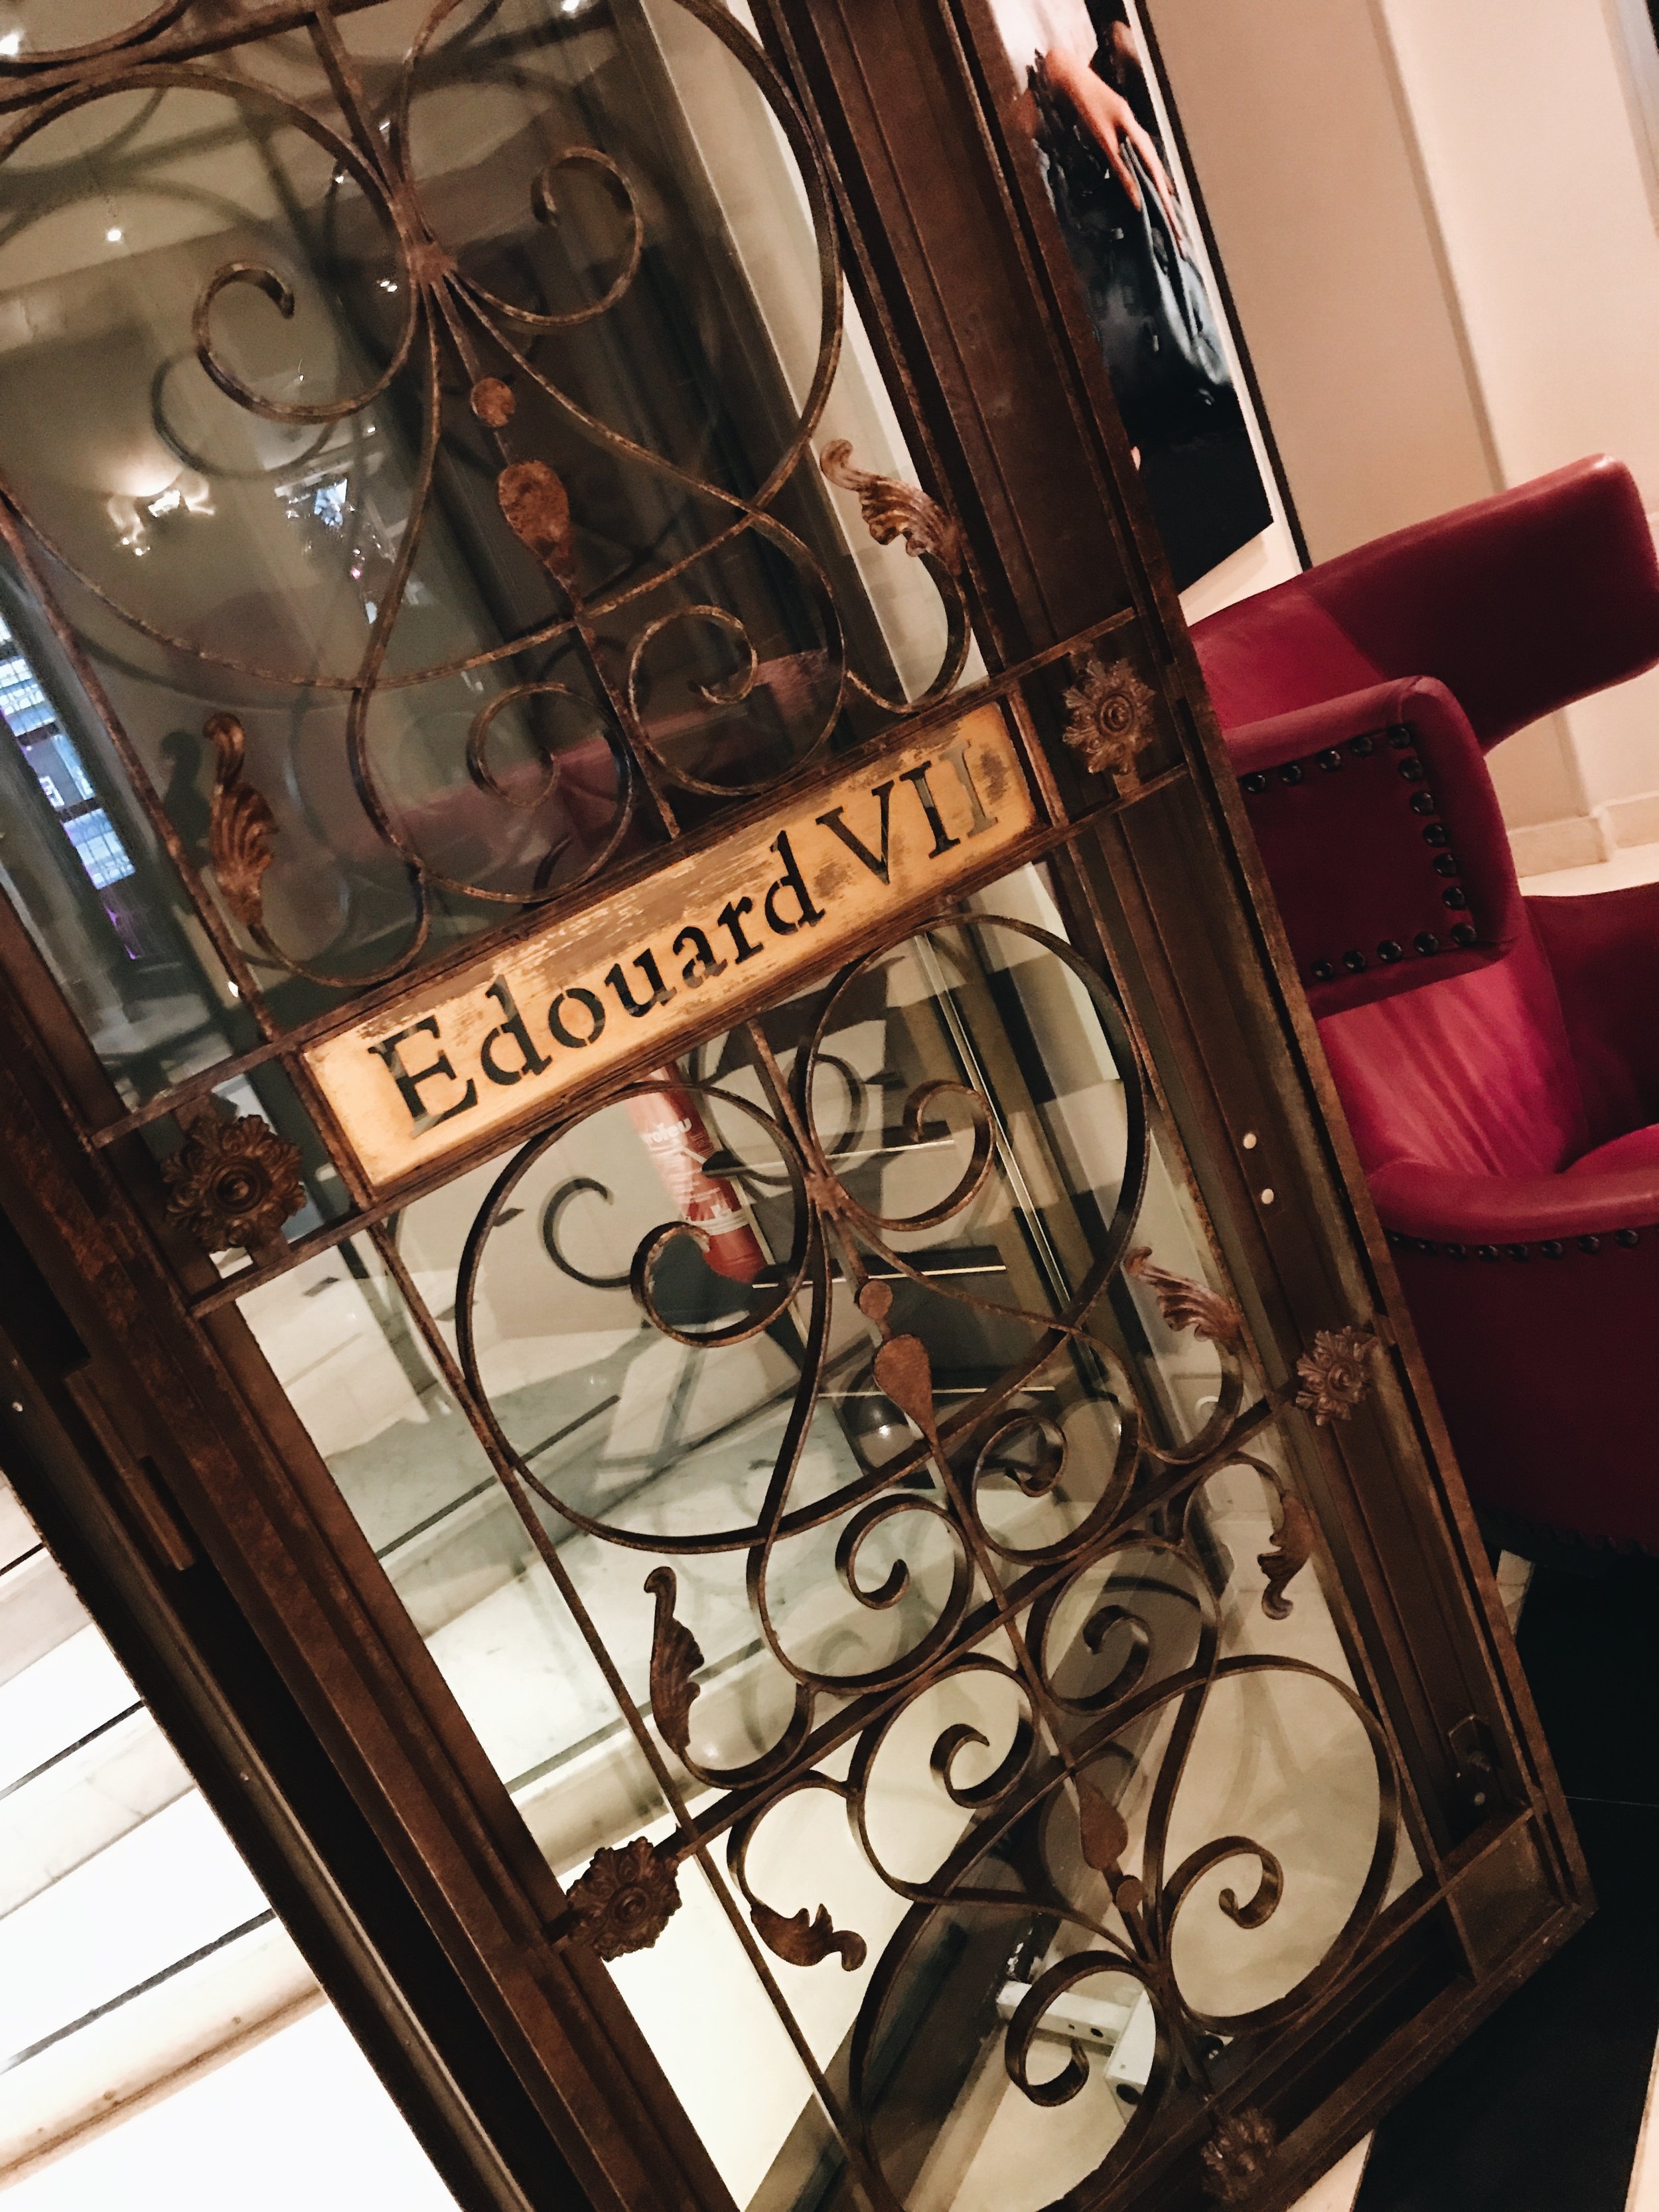  Decor details at Hotel Edouard 7, Paris 